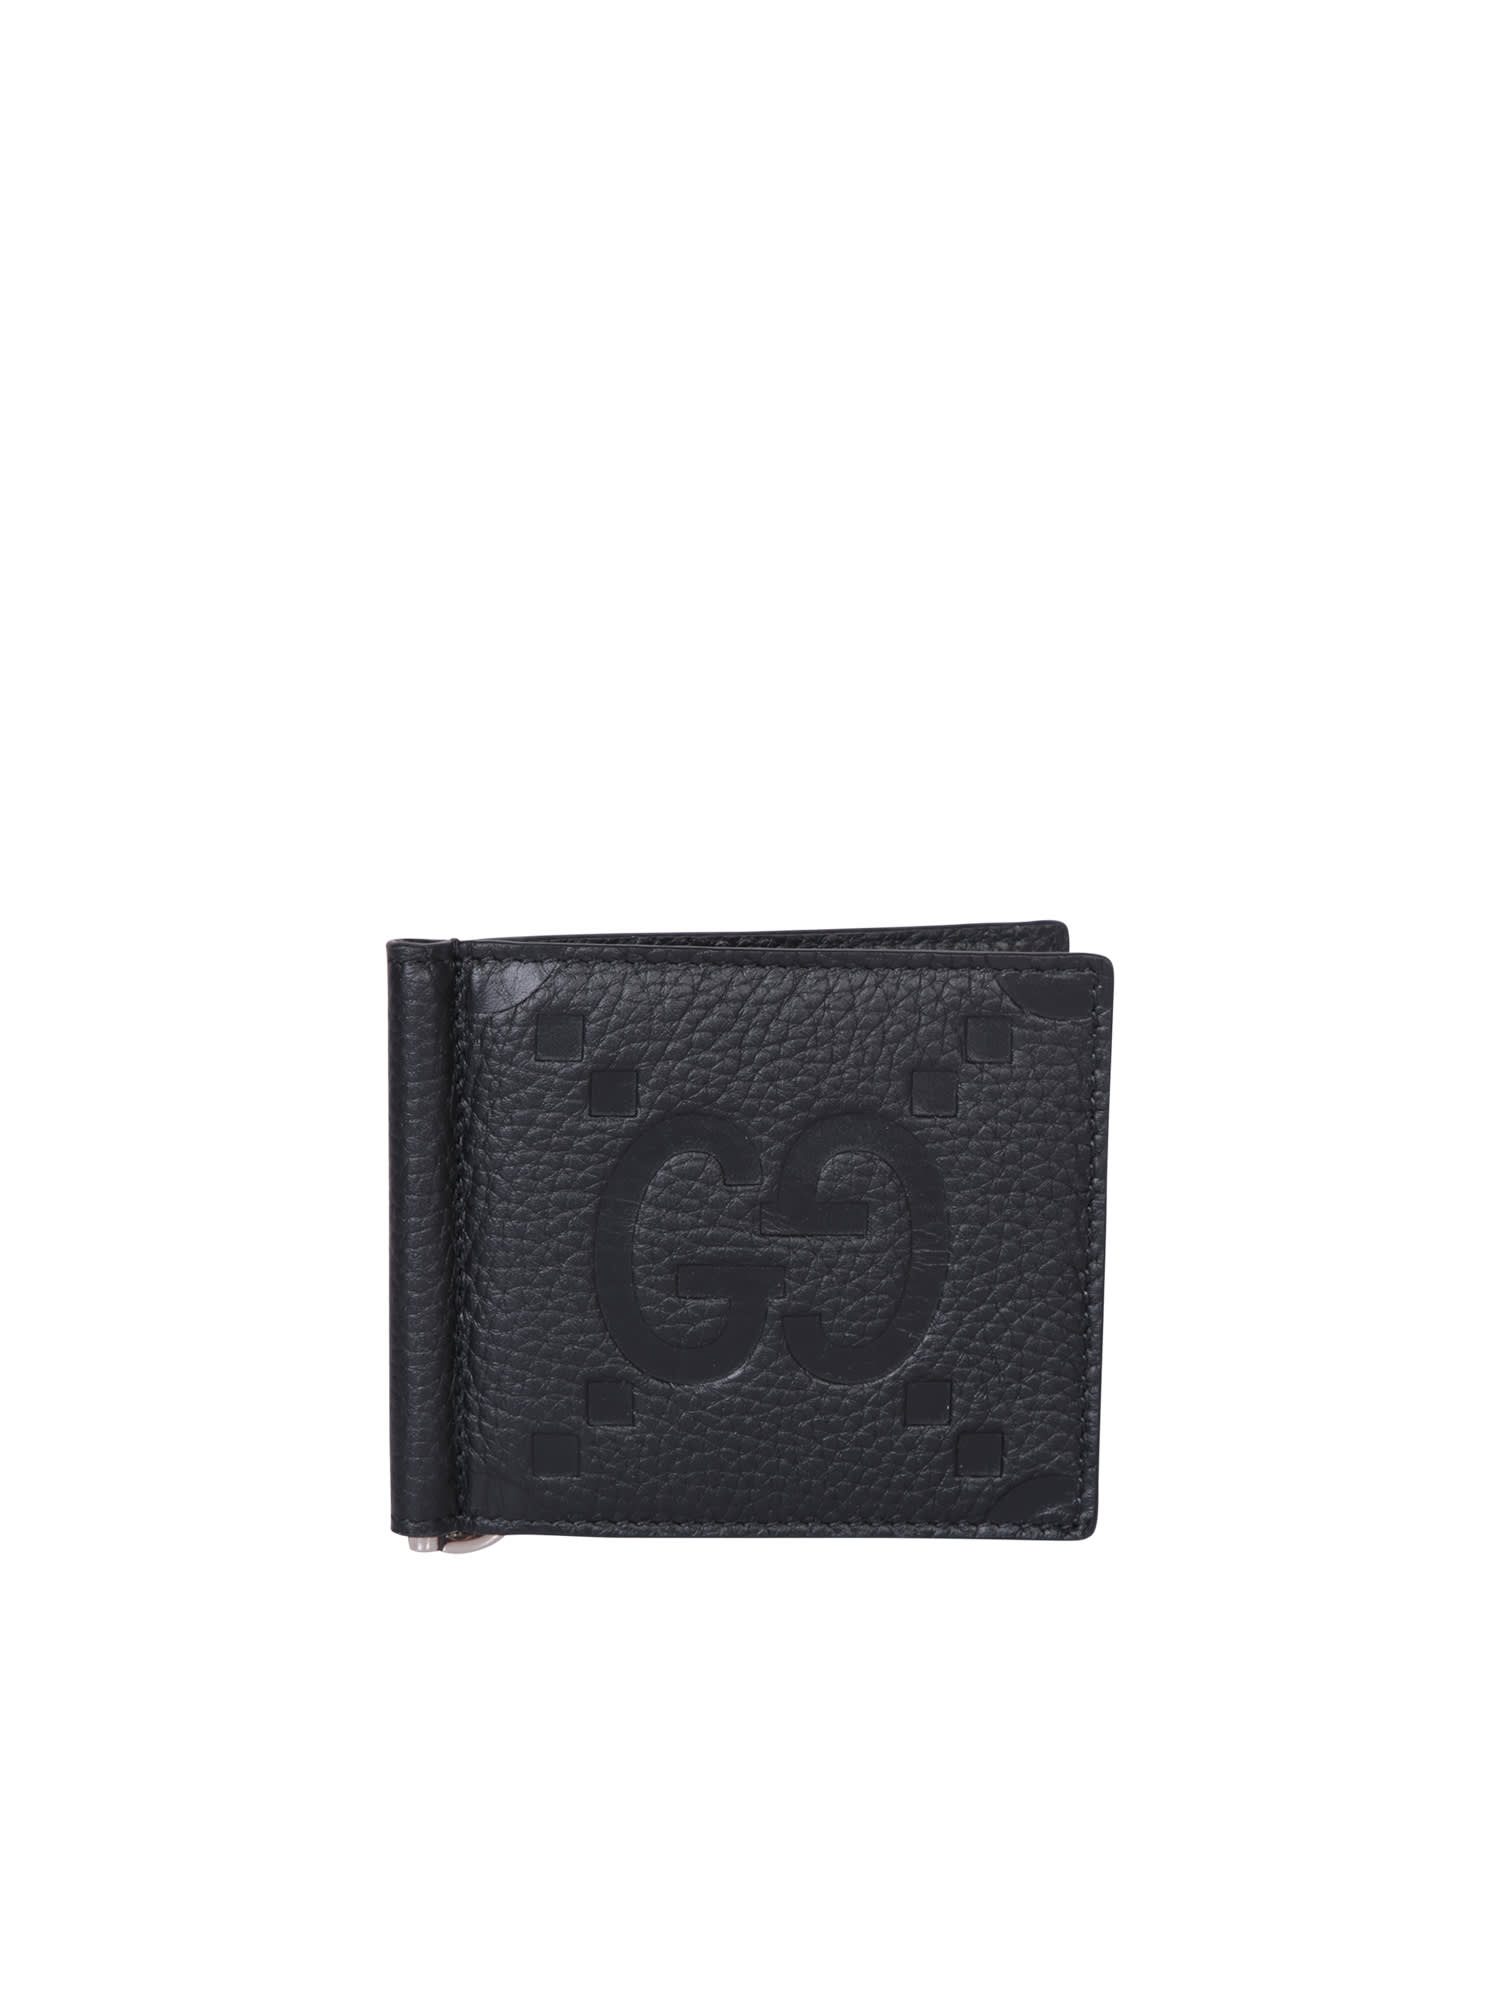 Gucci Black Leather Web Money Clip Bifold Wallet Gucci